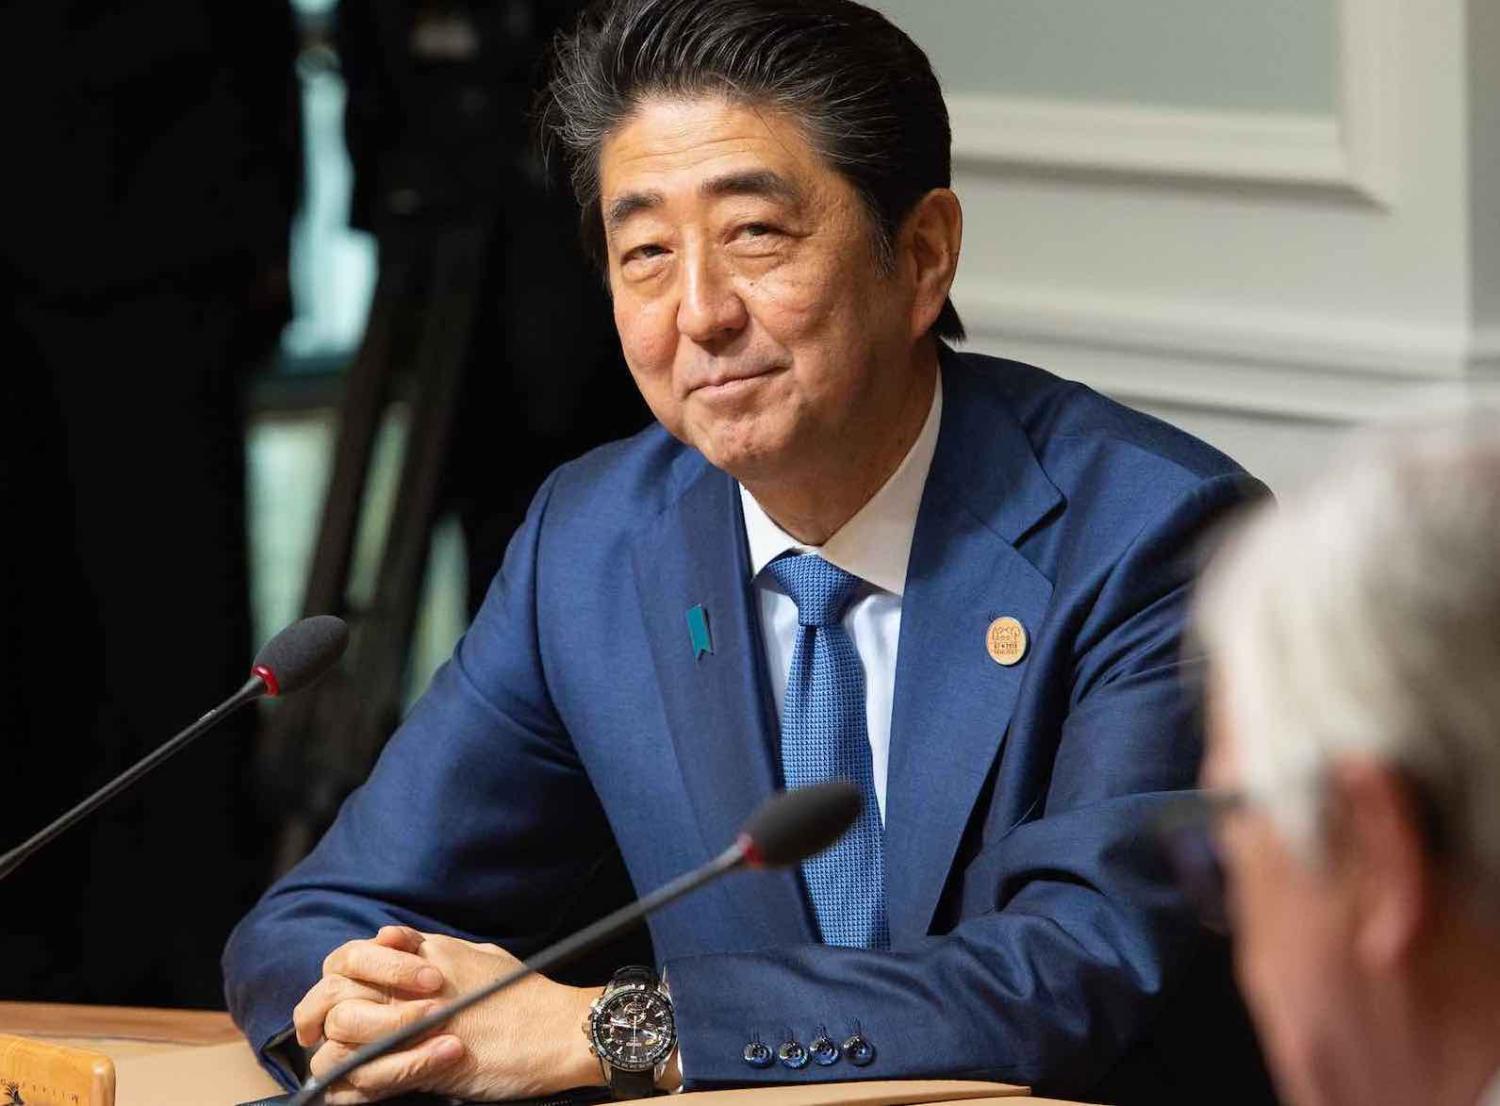 Japanese Prime Minister Shinzo Abe at the G7 summit (Photo: #G7Charlevoix/Flickr)